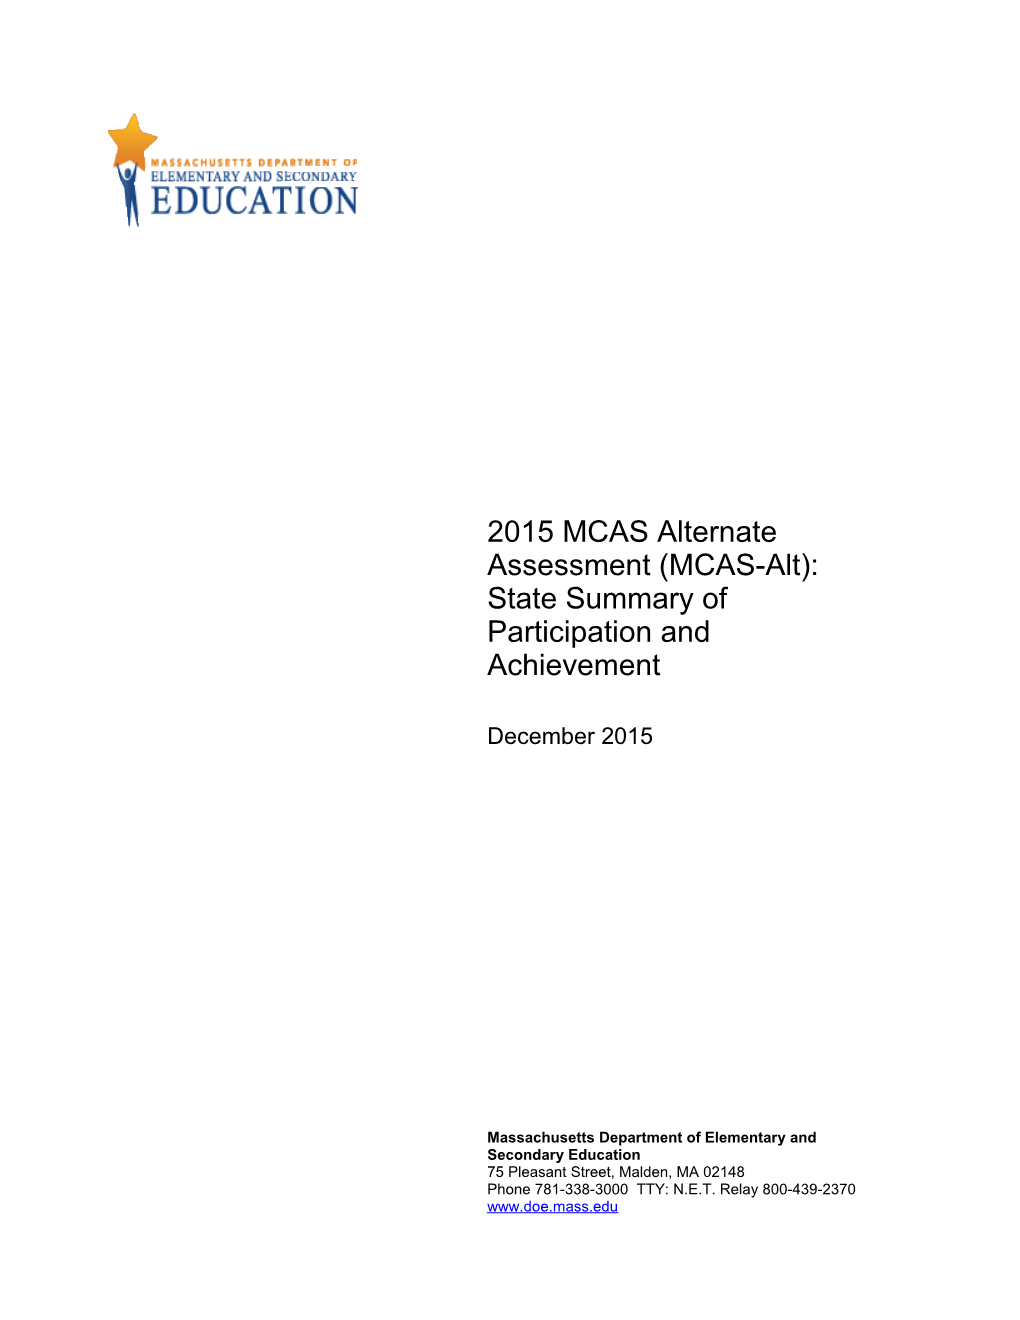 State Summary 2015 MCAS-Alt: Participation and Achievement